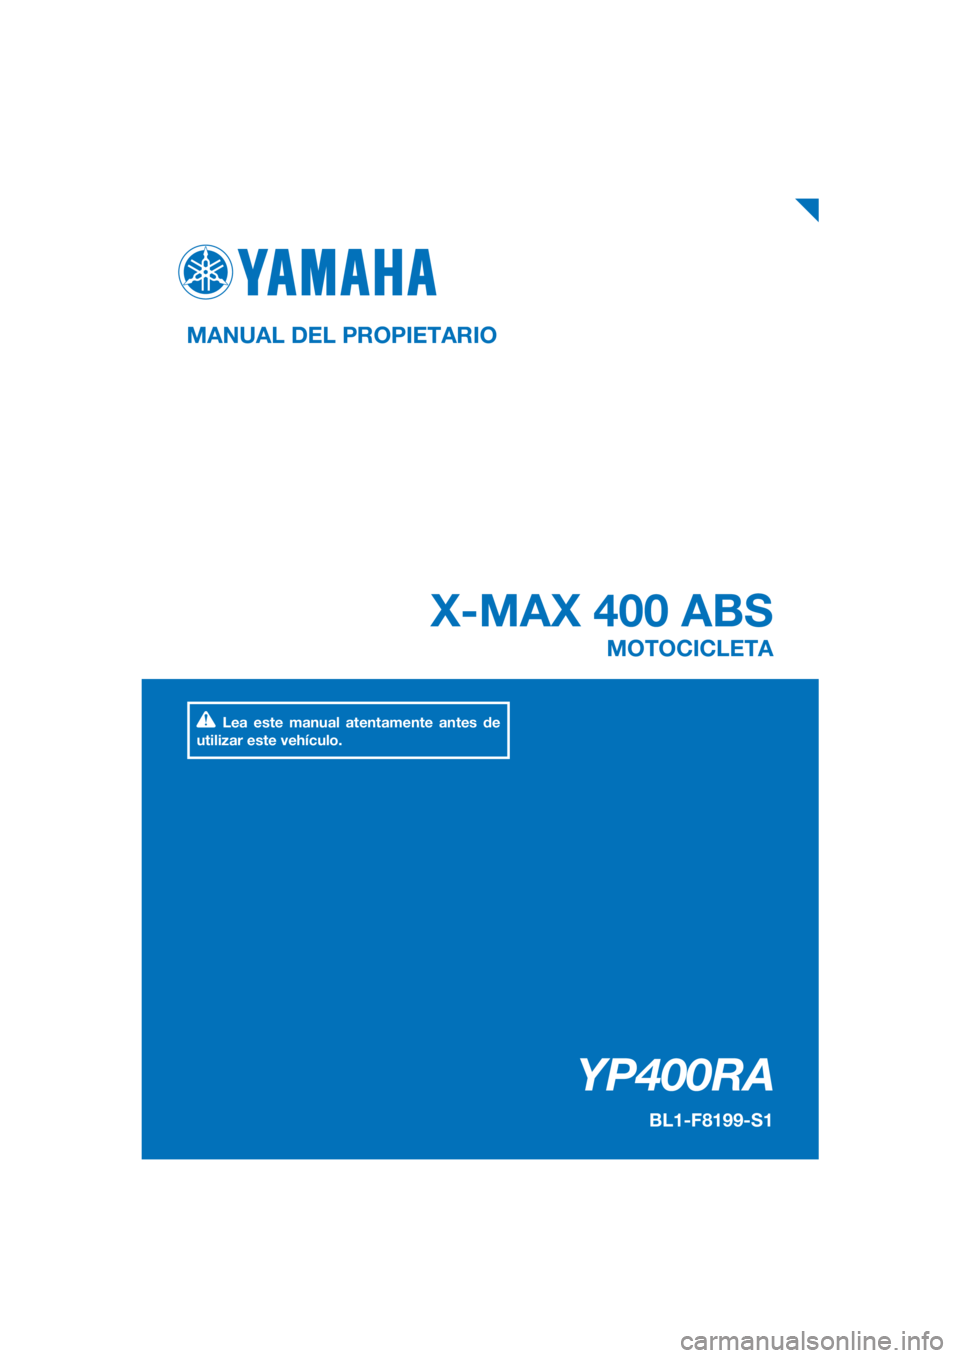 YAMAHA XMAX 400 2018  Manuale de Empleo (in Spanish) 